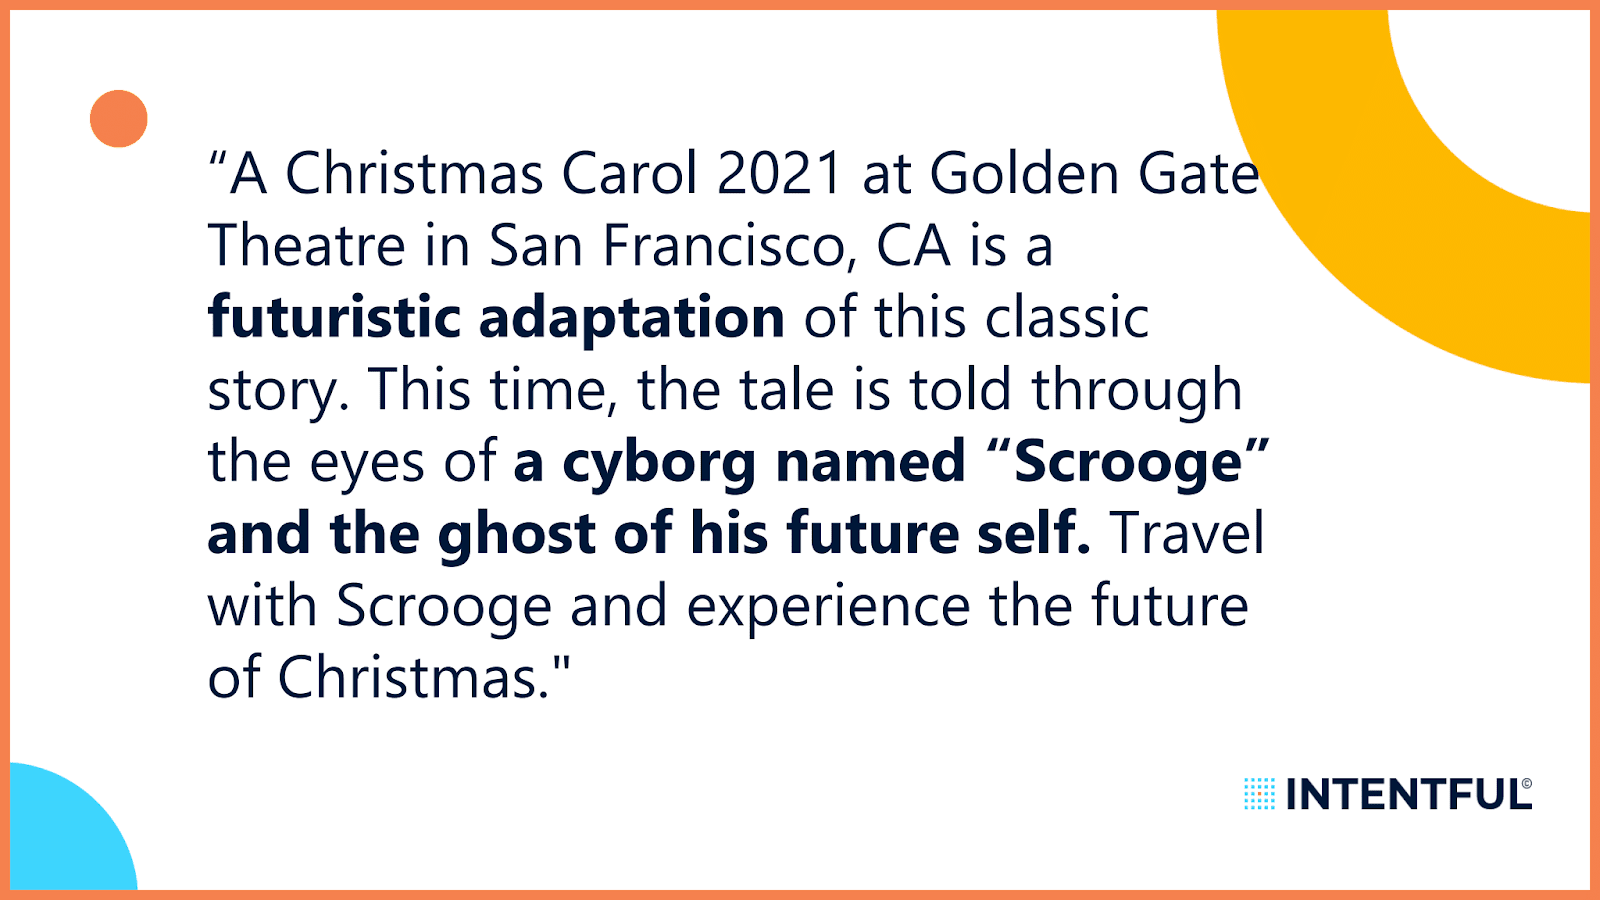 How an AI tool interpreted "A Christmas Carol" into a bizare story about a cyborg.